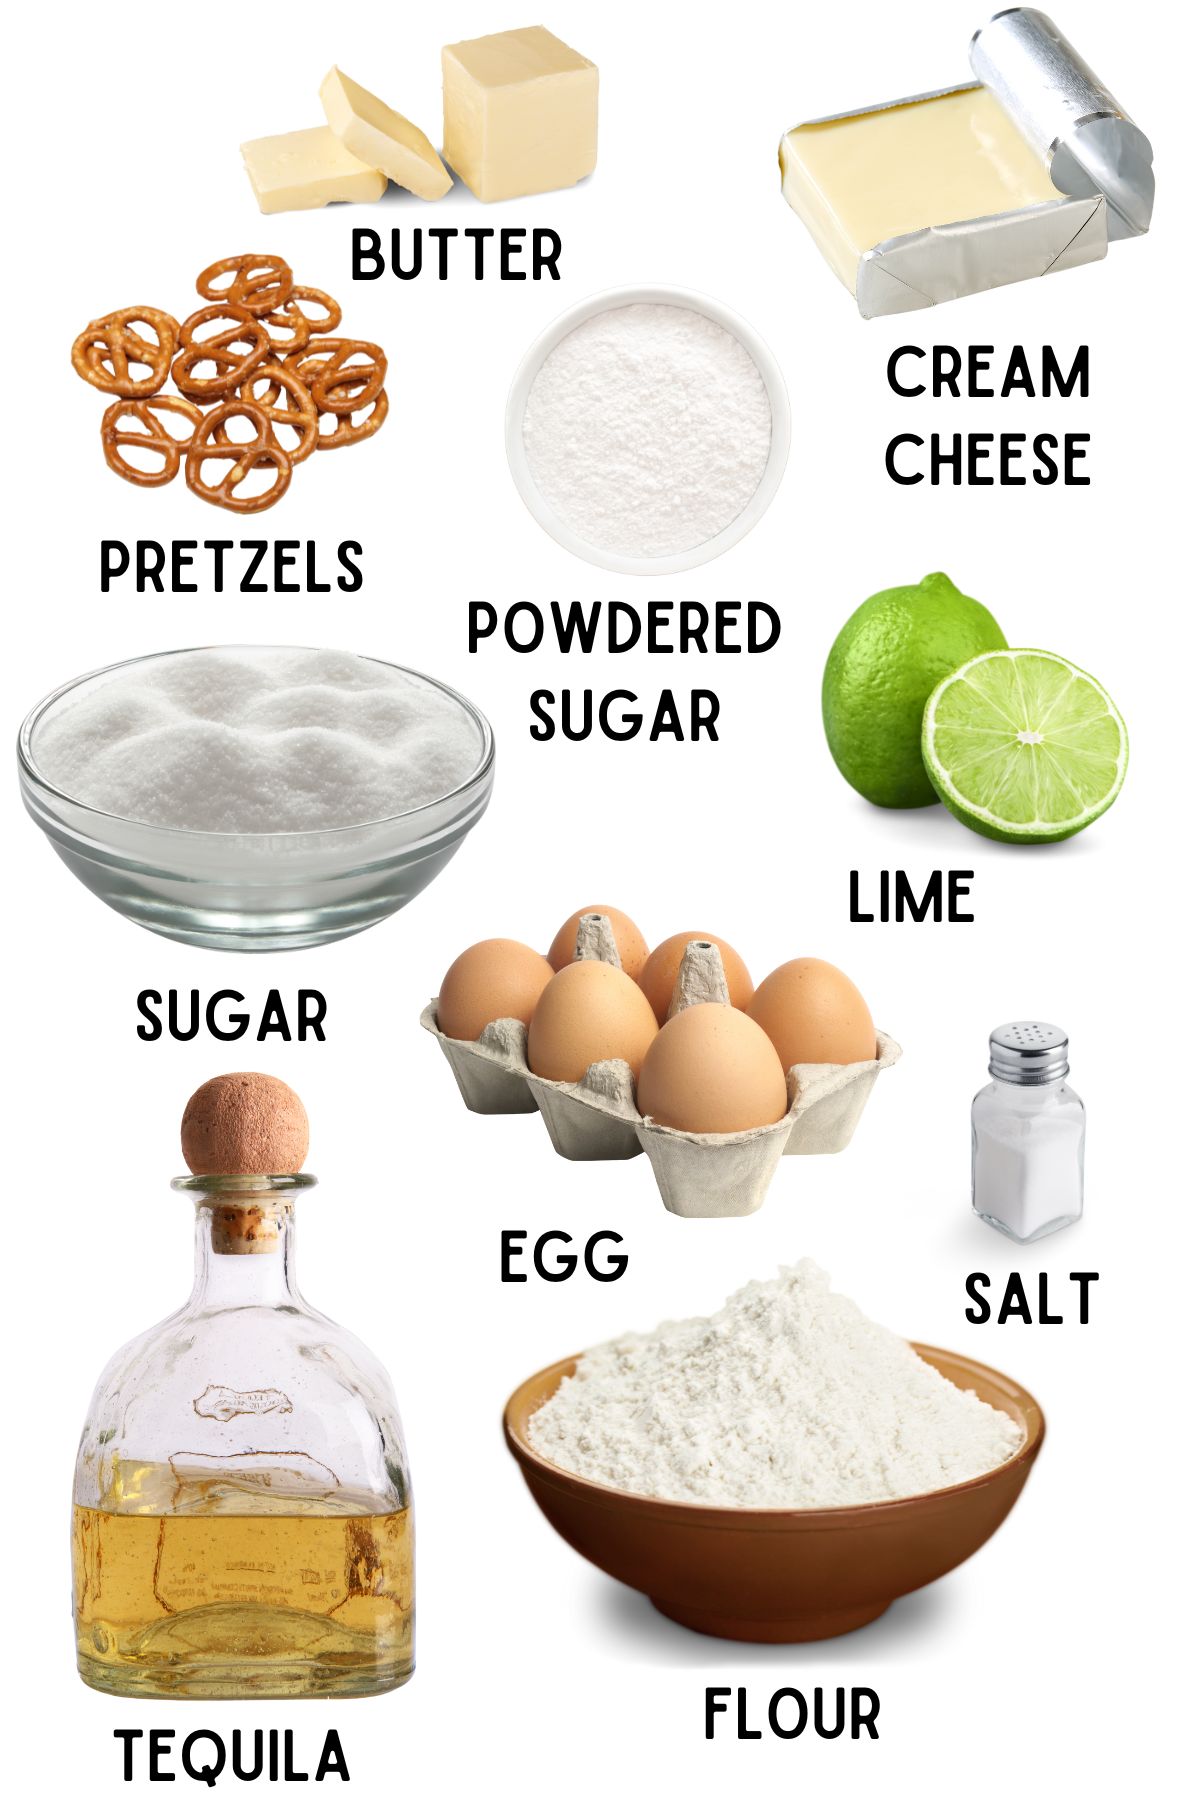 Labeled ingredients for margarita pound cake.